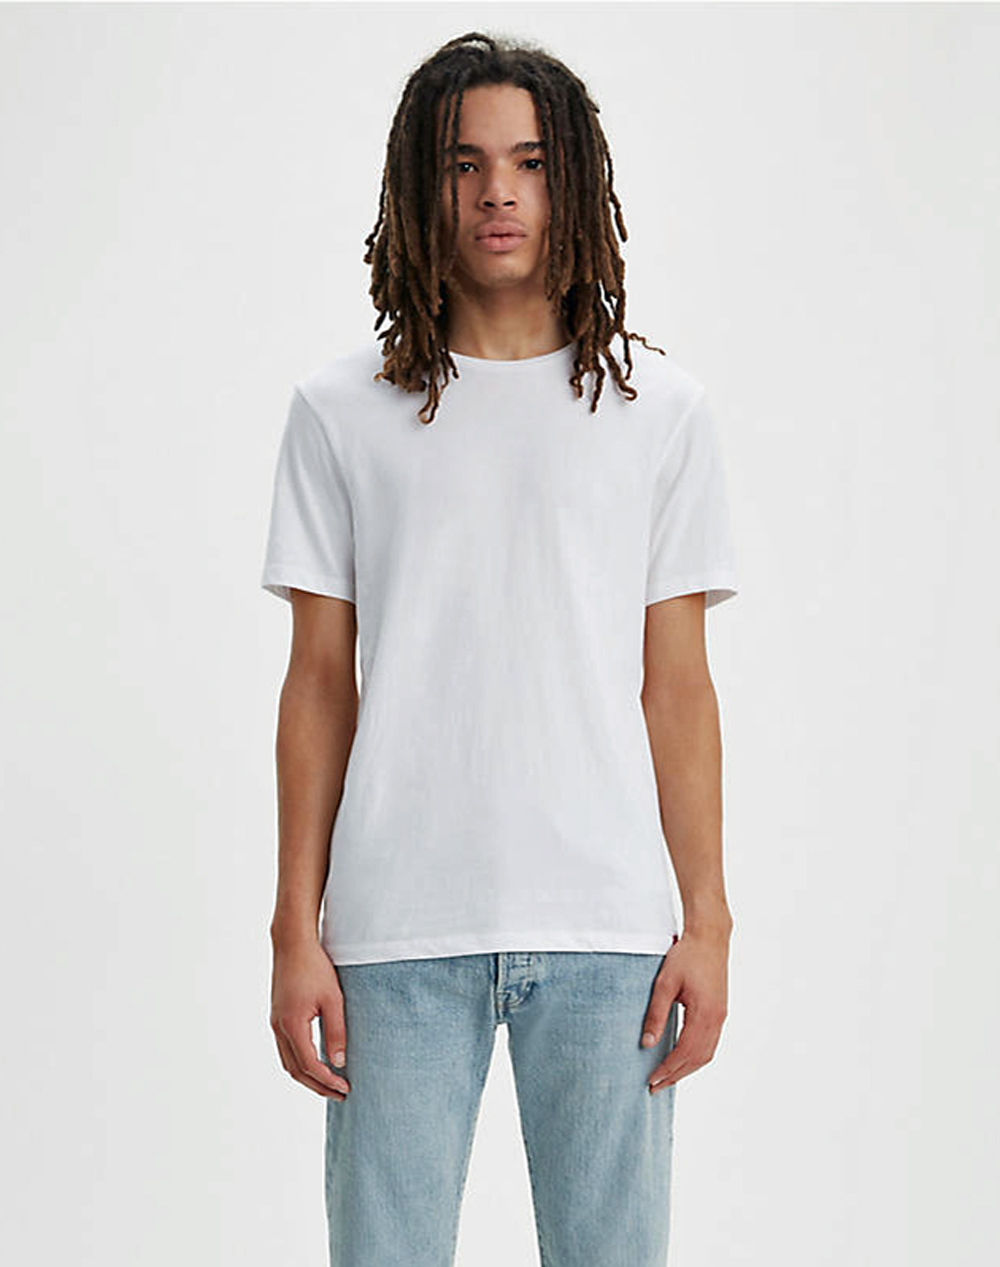 Levi’s® camiseta de hombre básica de manga corta 79541-0000 blanca